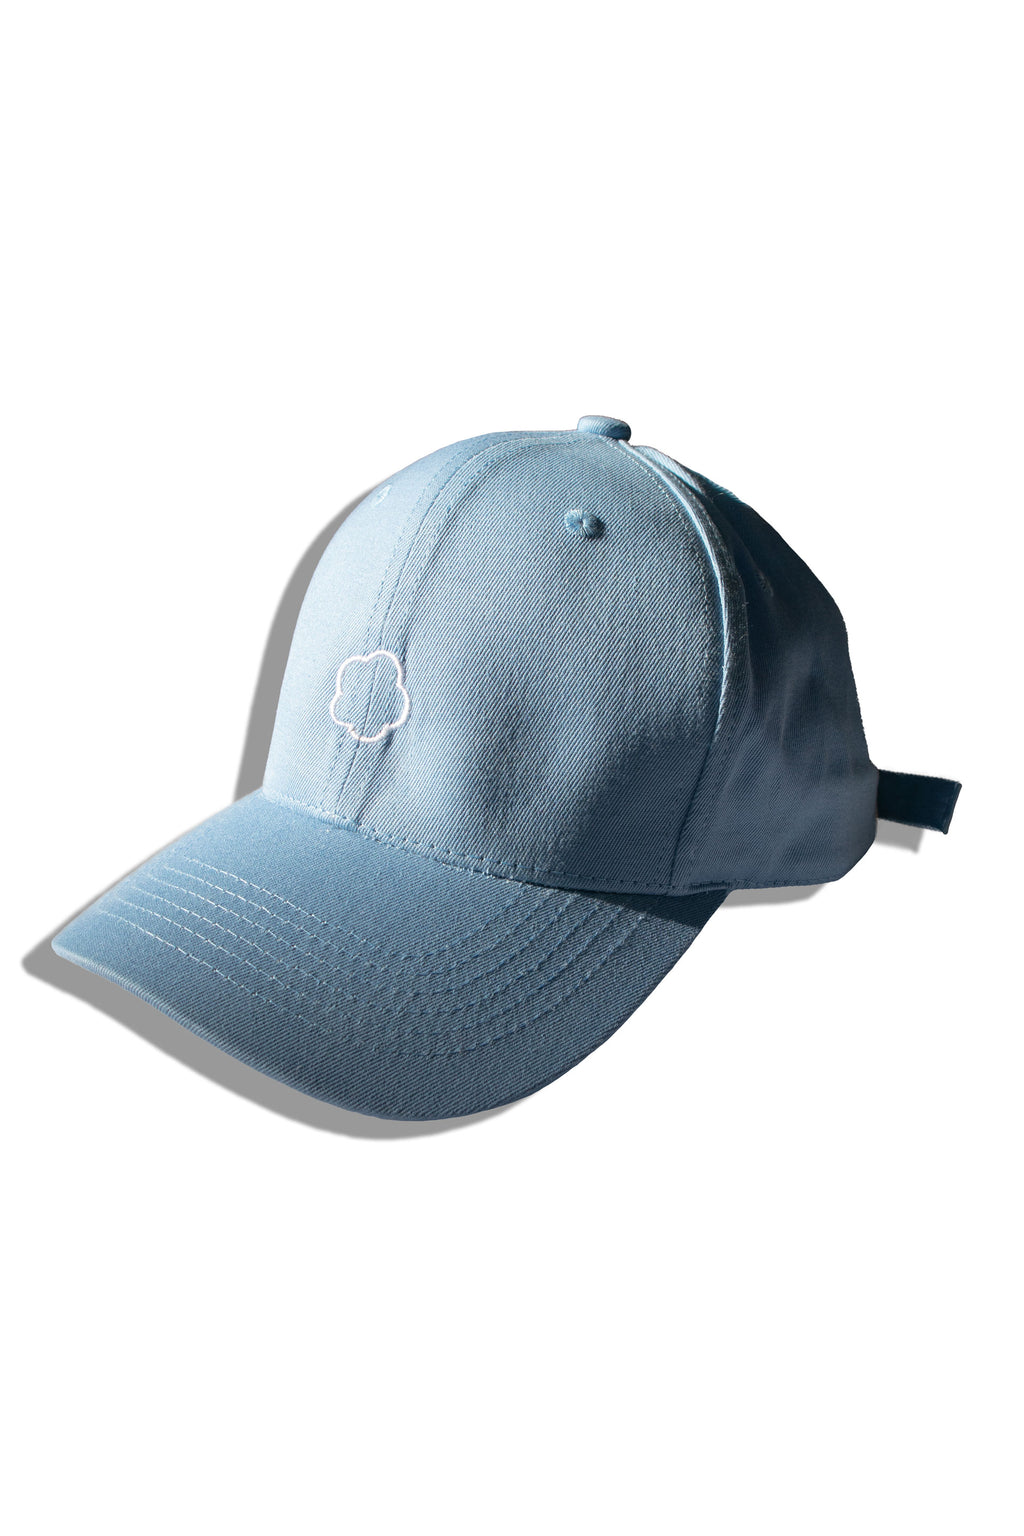 seree-baseball-cap-baby-blue